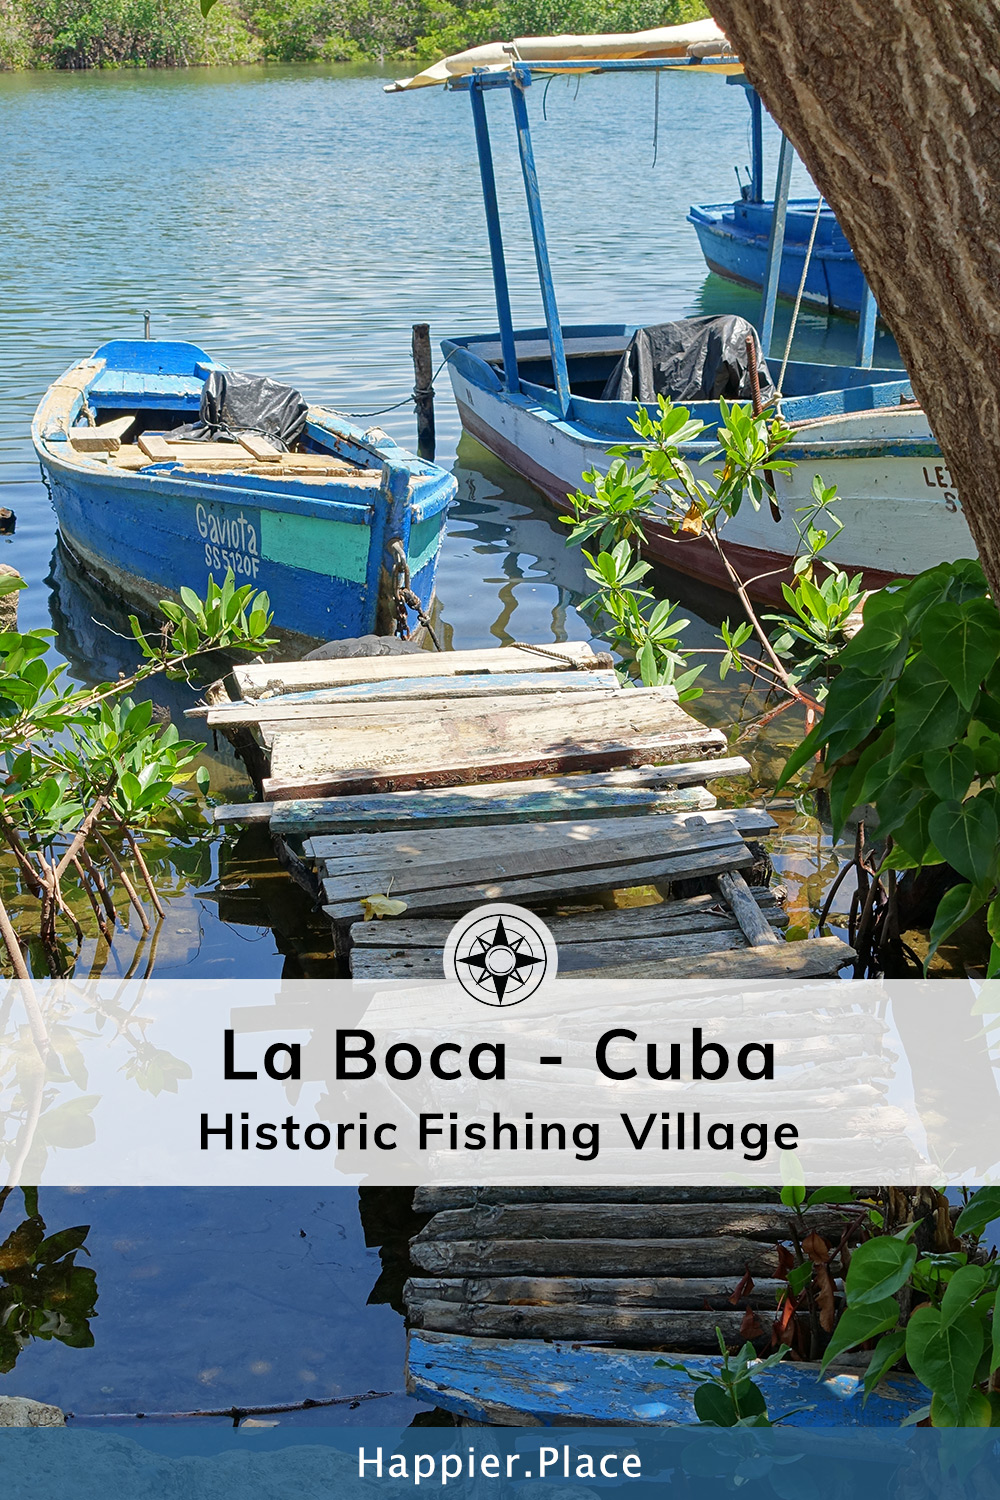 Small village fishing boat harbor in Caribbean Seaside Village La Boca, Cuba.